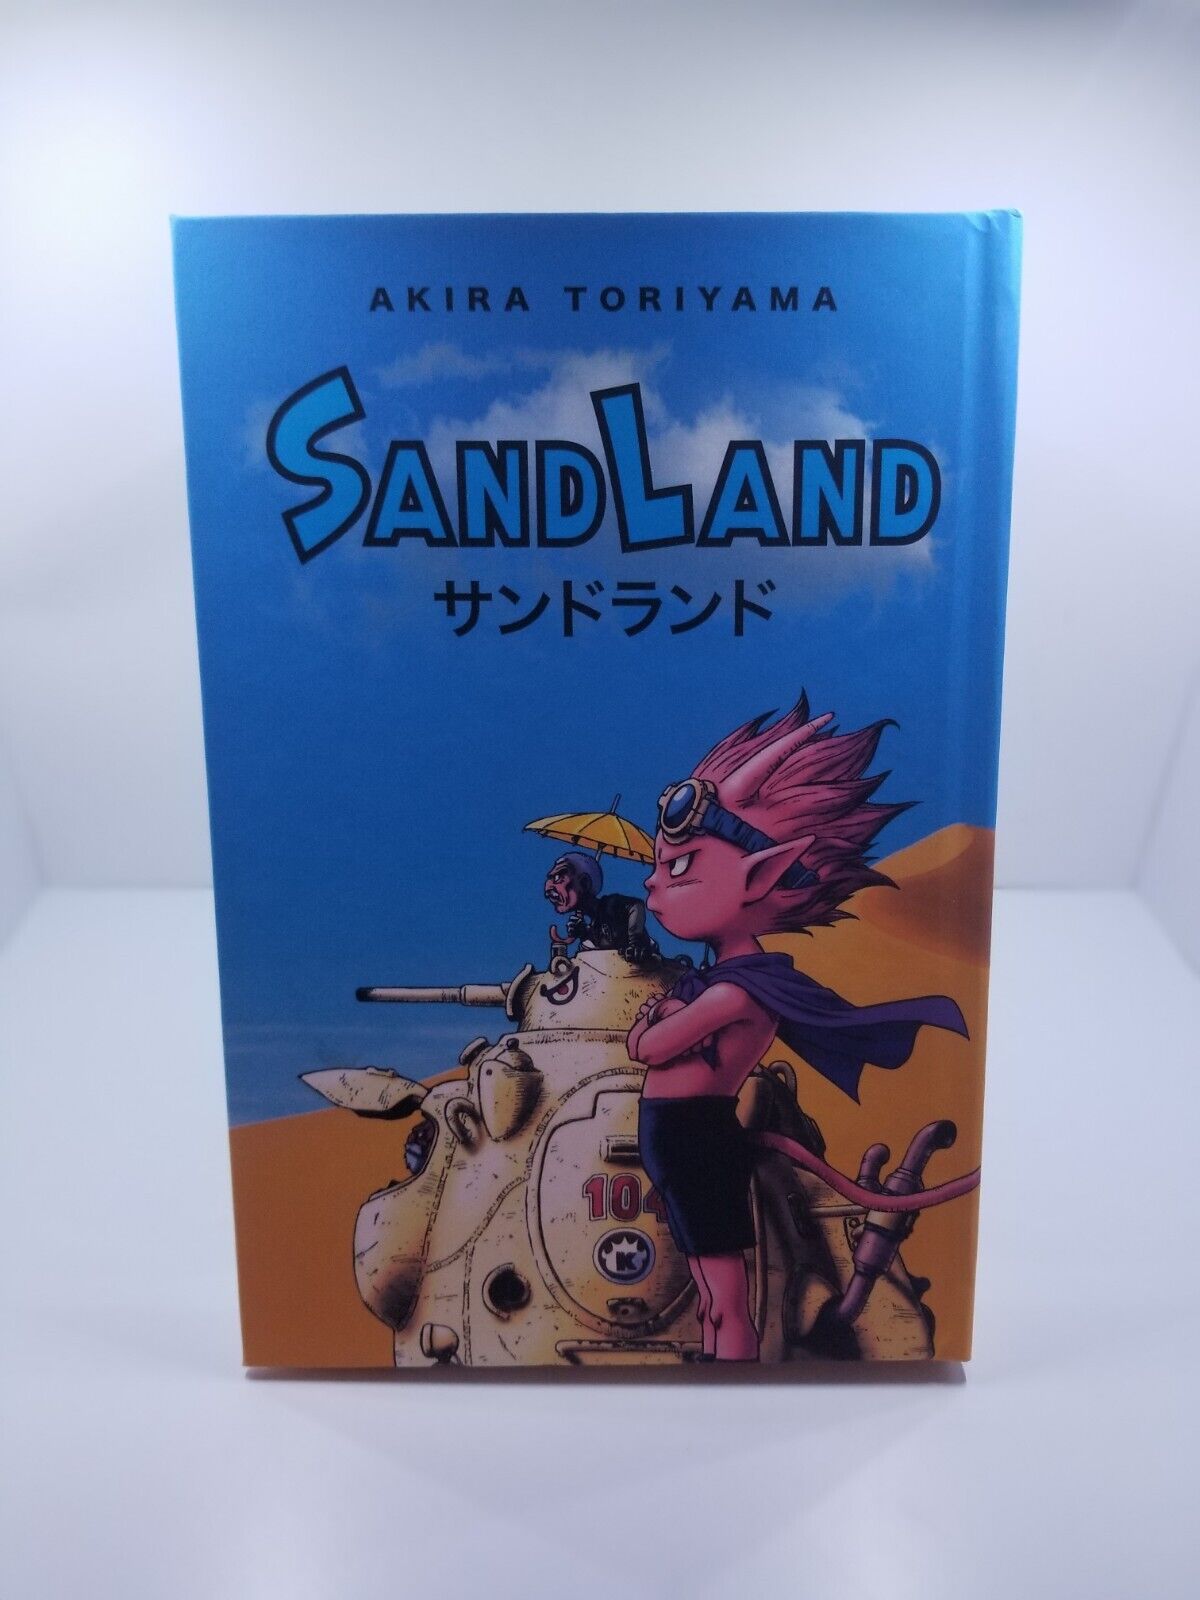 Sand Land by Akira Toriyama ENGLISH HARDCOVER Graphic Novel